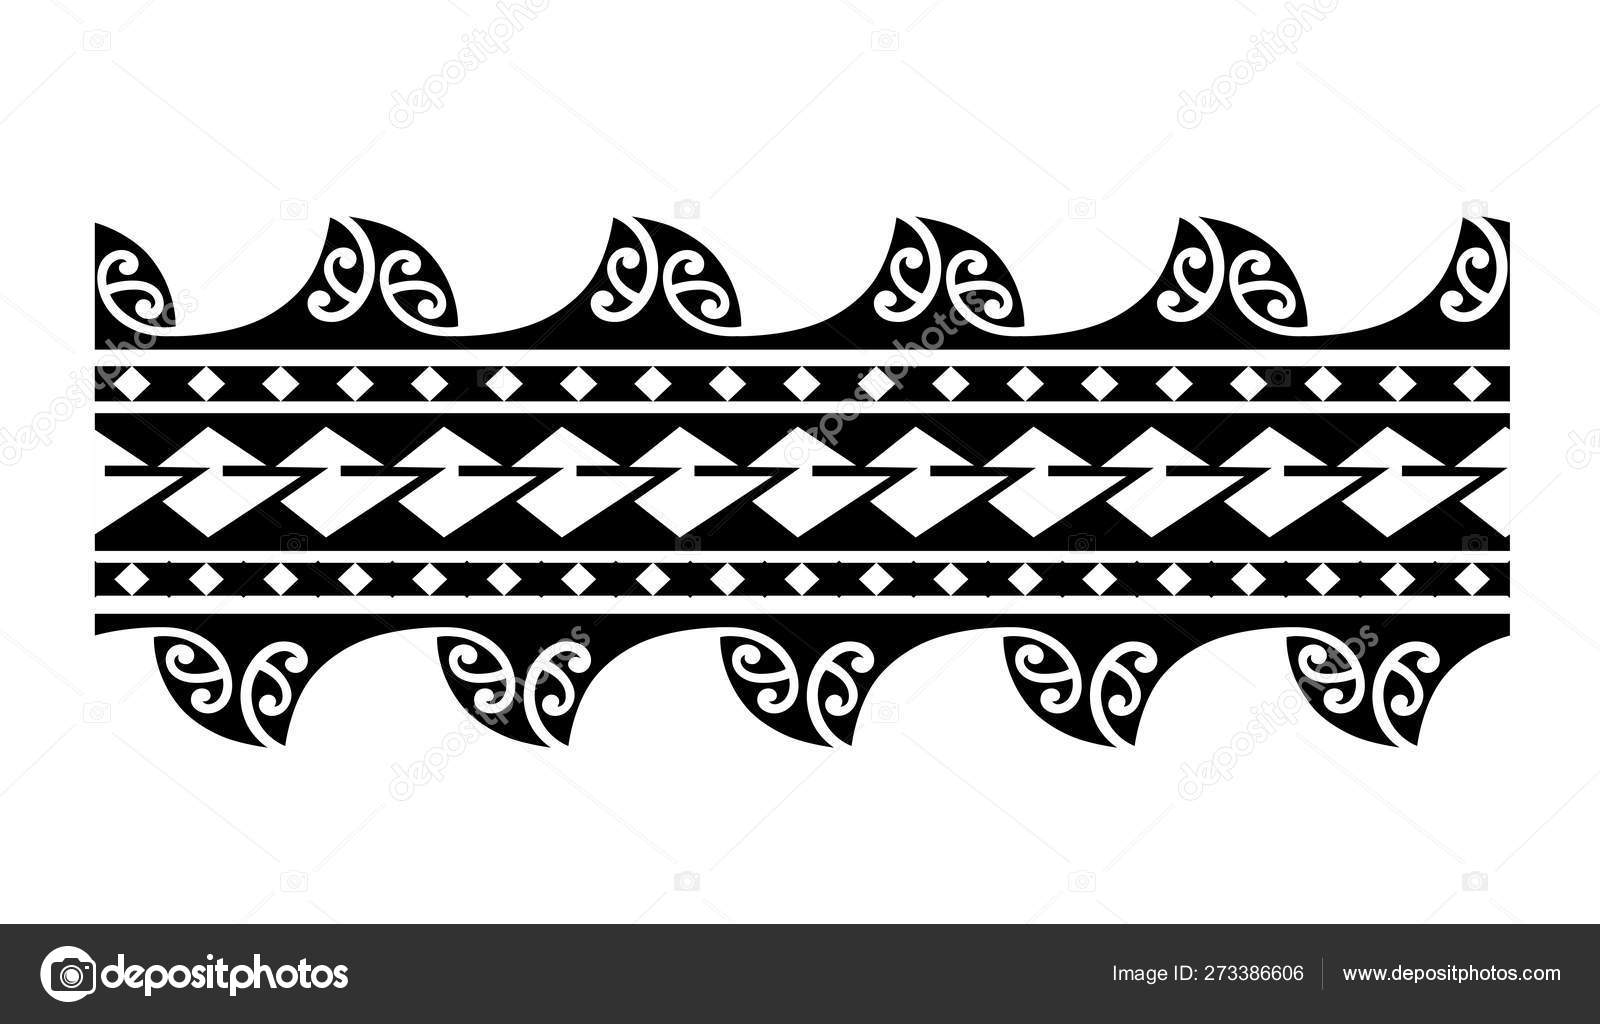 Tattoo Arm Band Tattoo Hand Band Maori Tattoo Maori Tribal Stock Vector Image By C 1rudvi